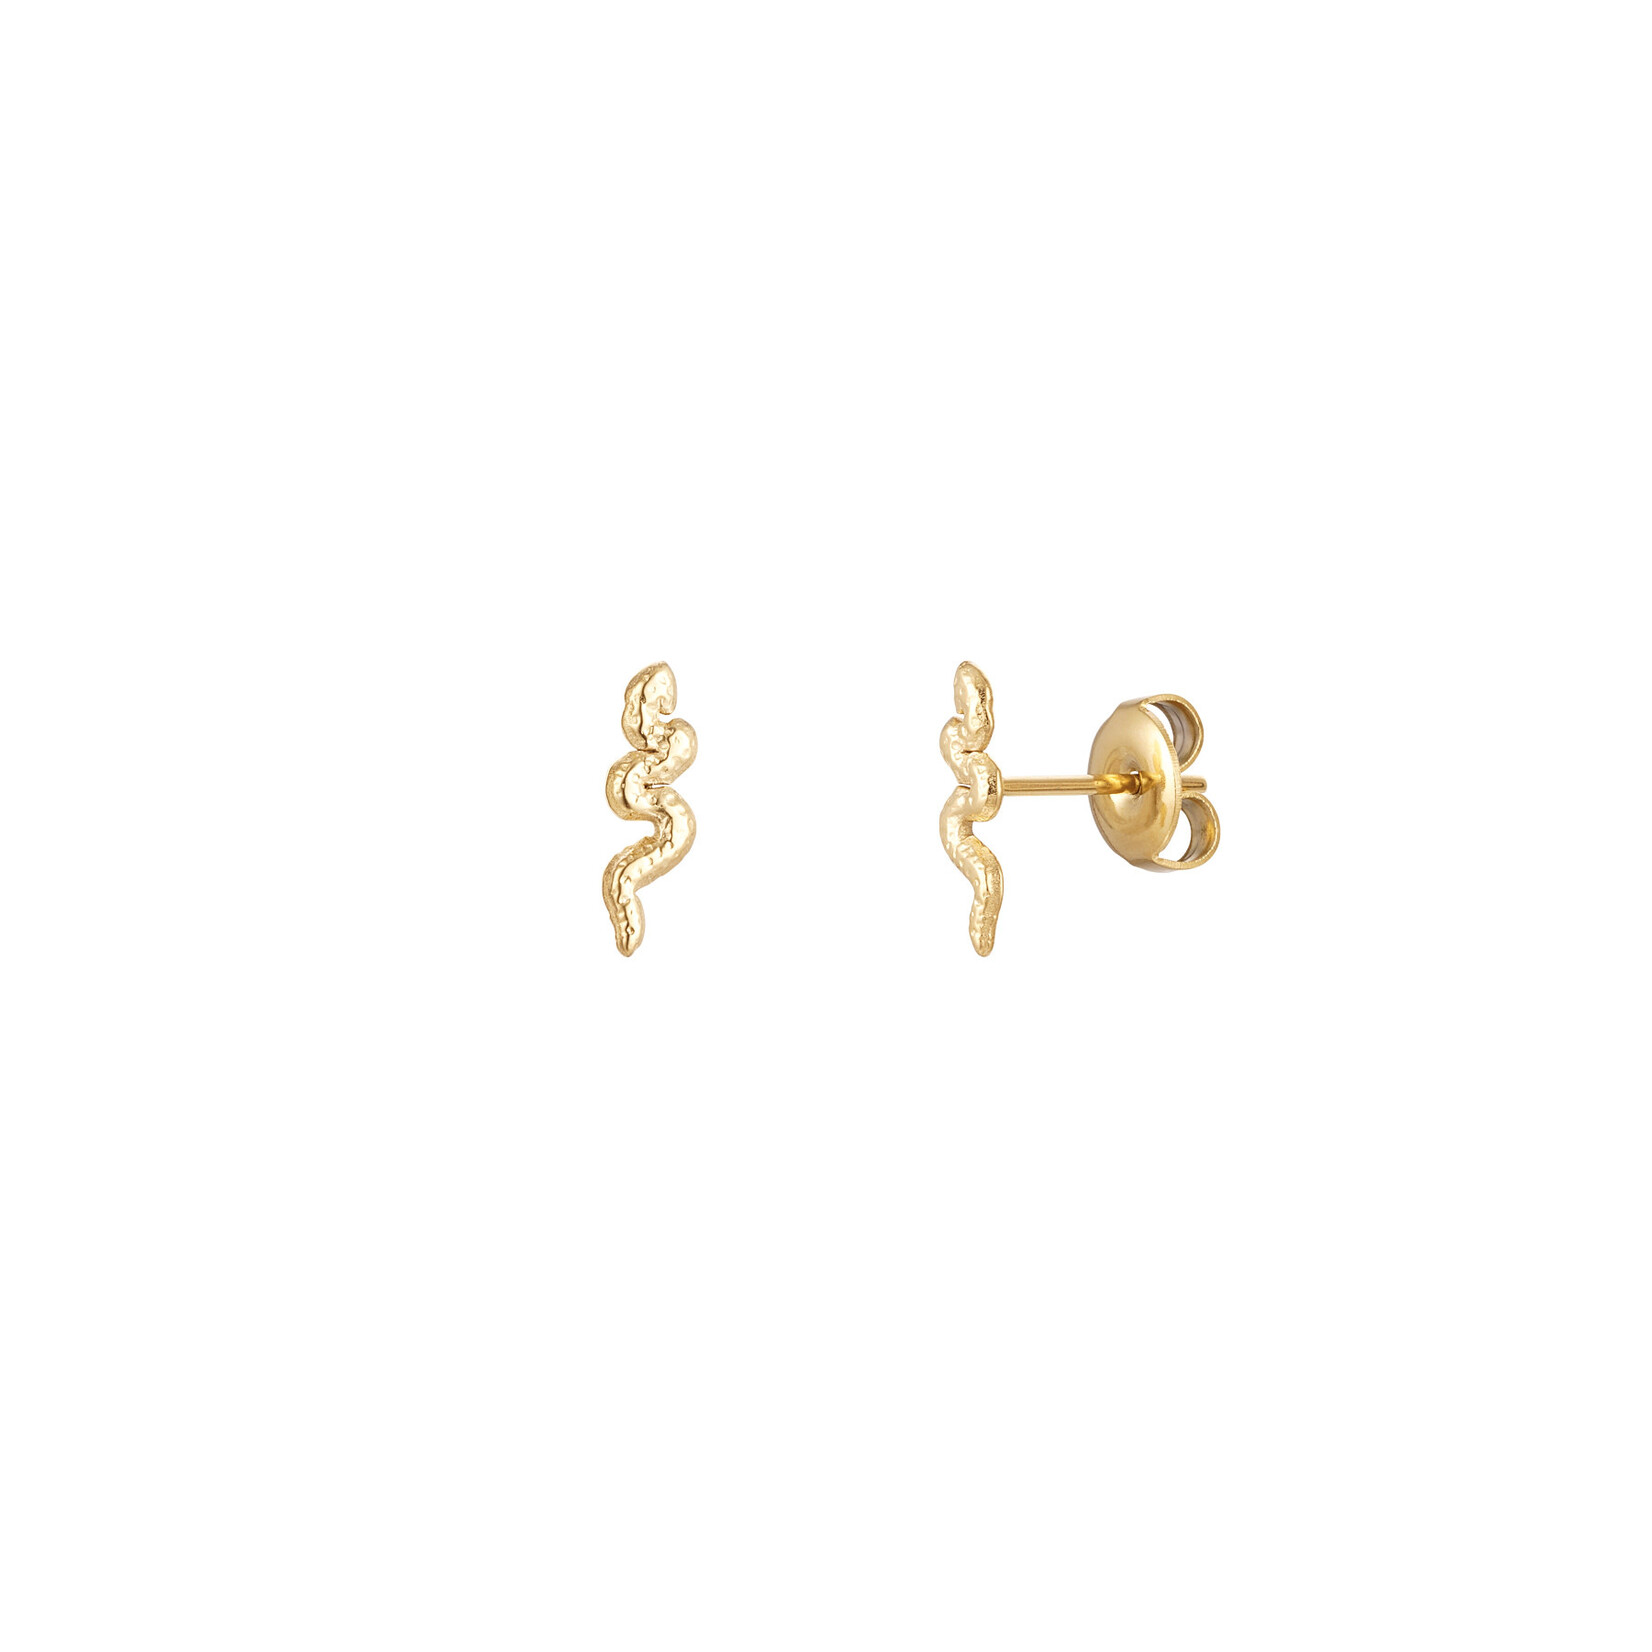 Jewelry Earrings snake stainless steel gold